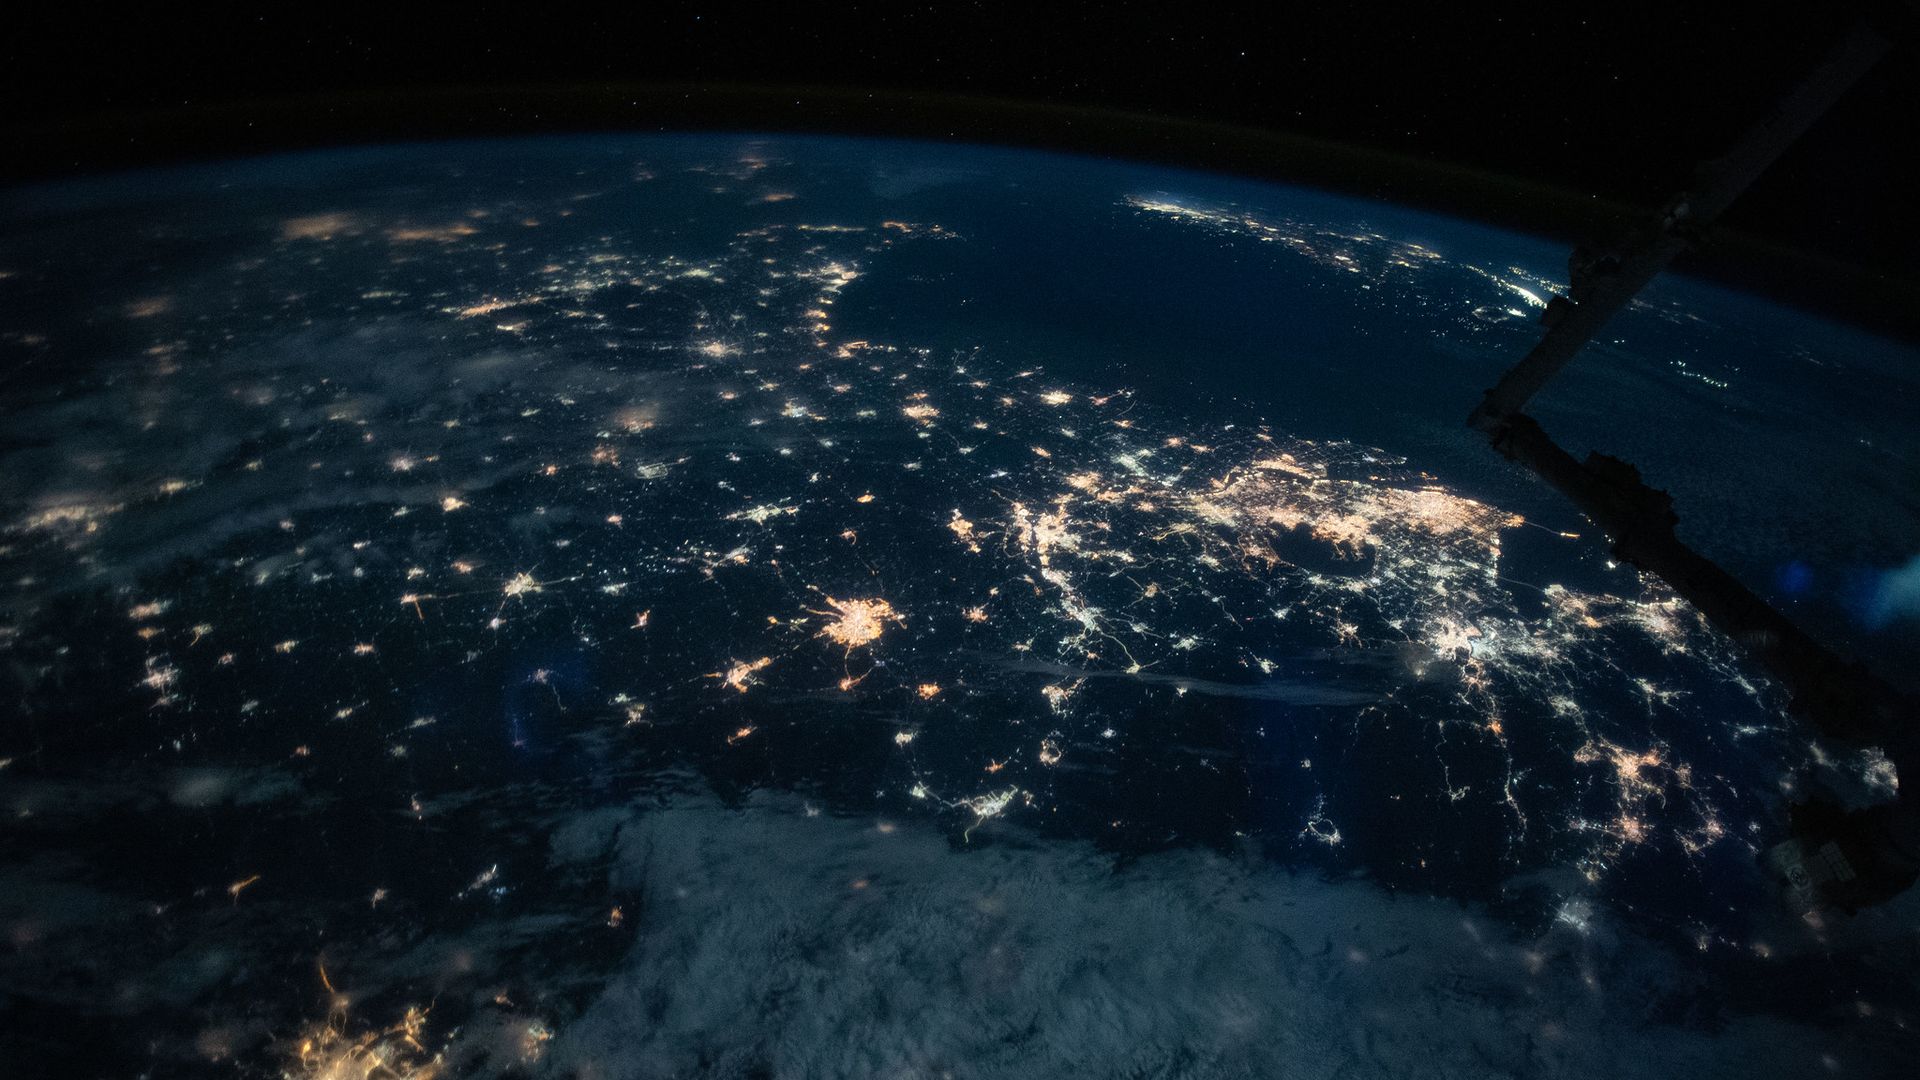 Bright lights illuminated on Earth seen from orbit at night.